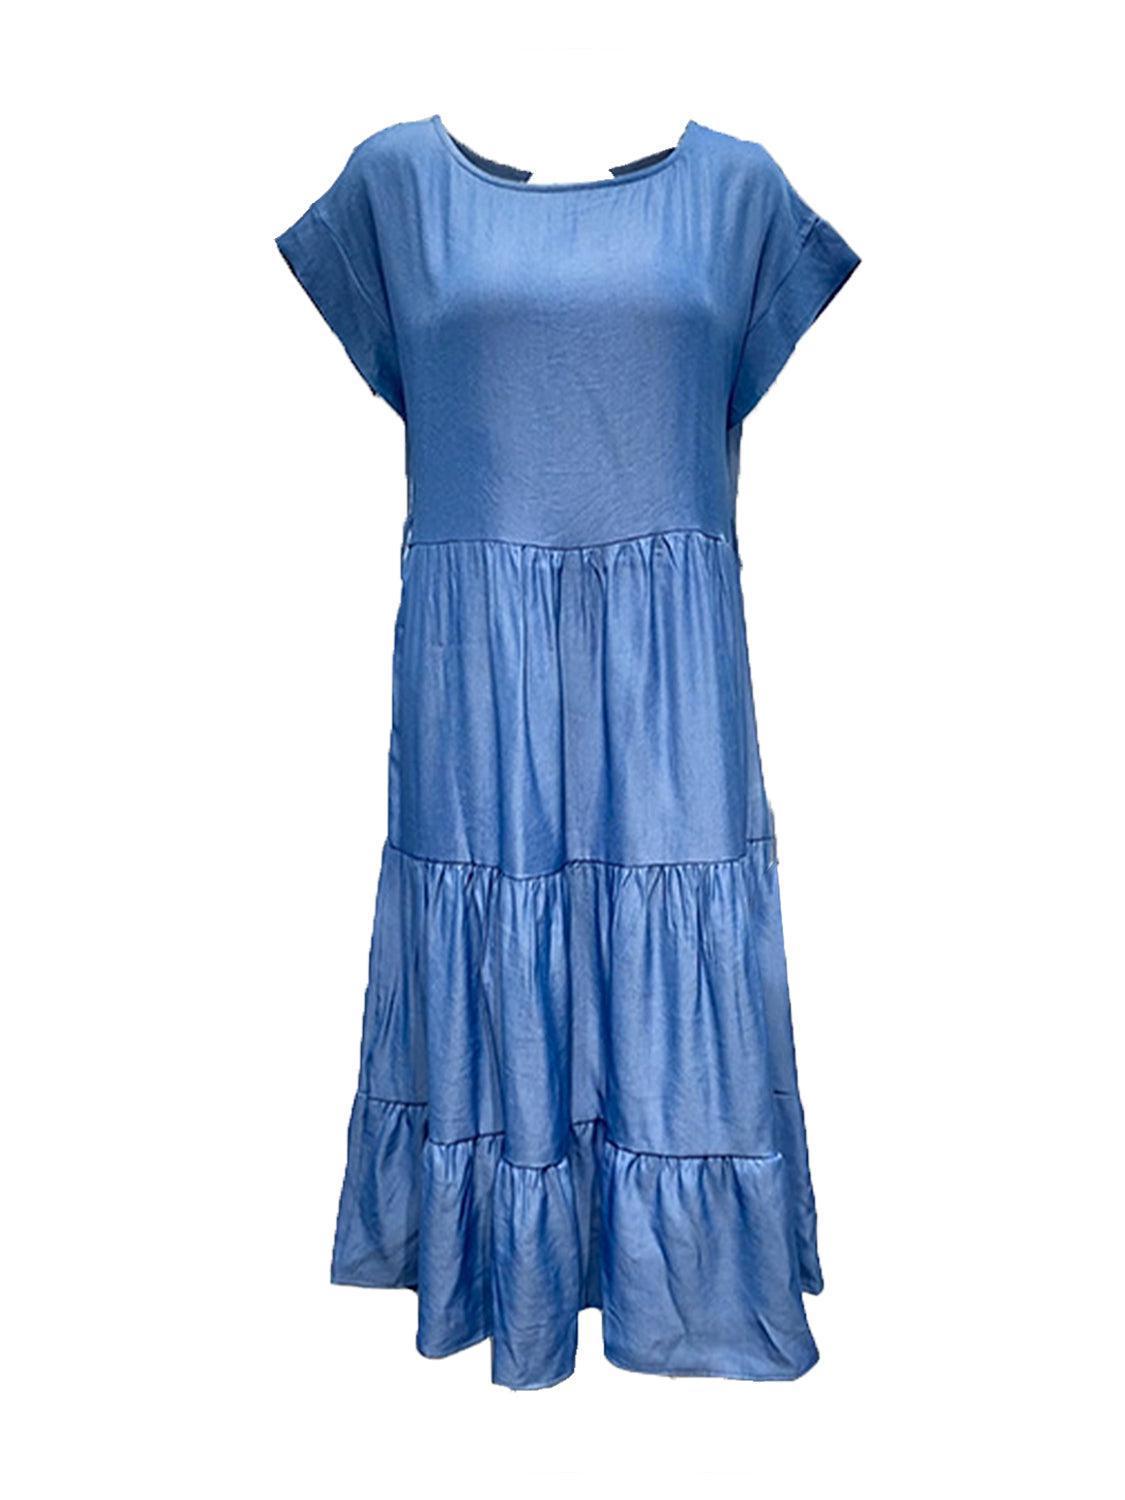 a blue dress on a white background